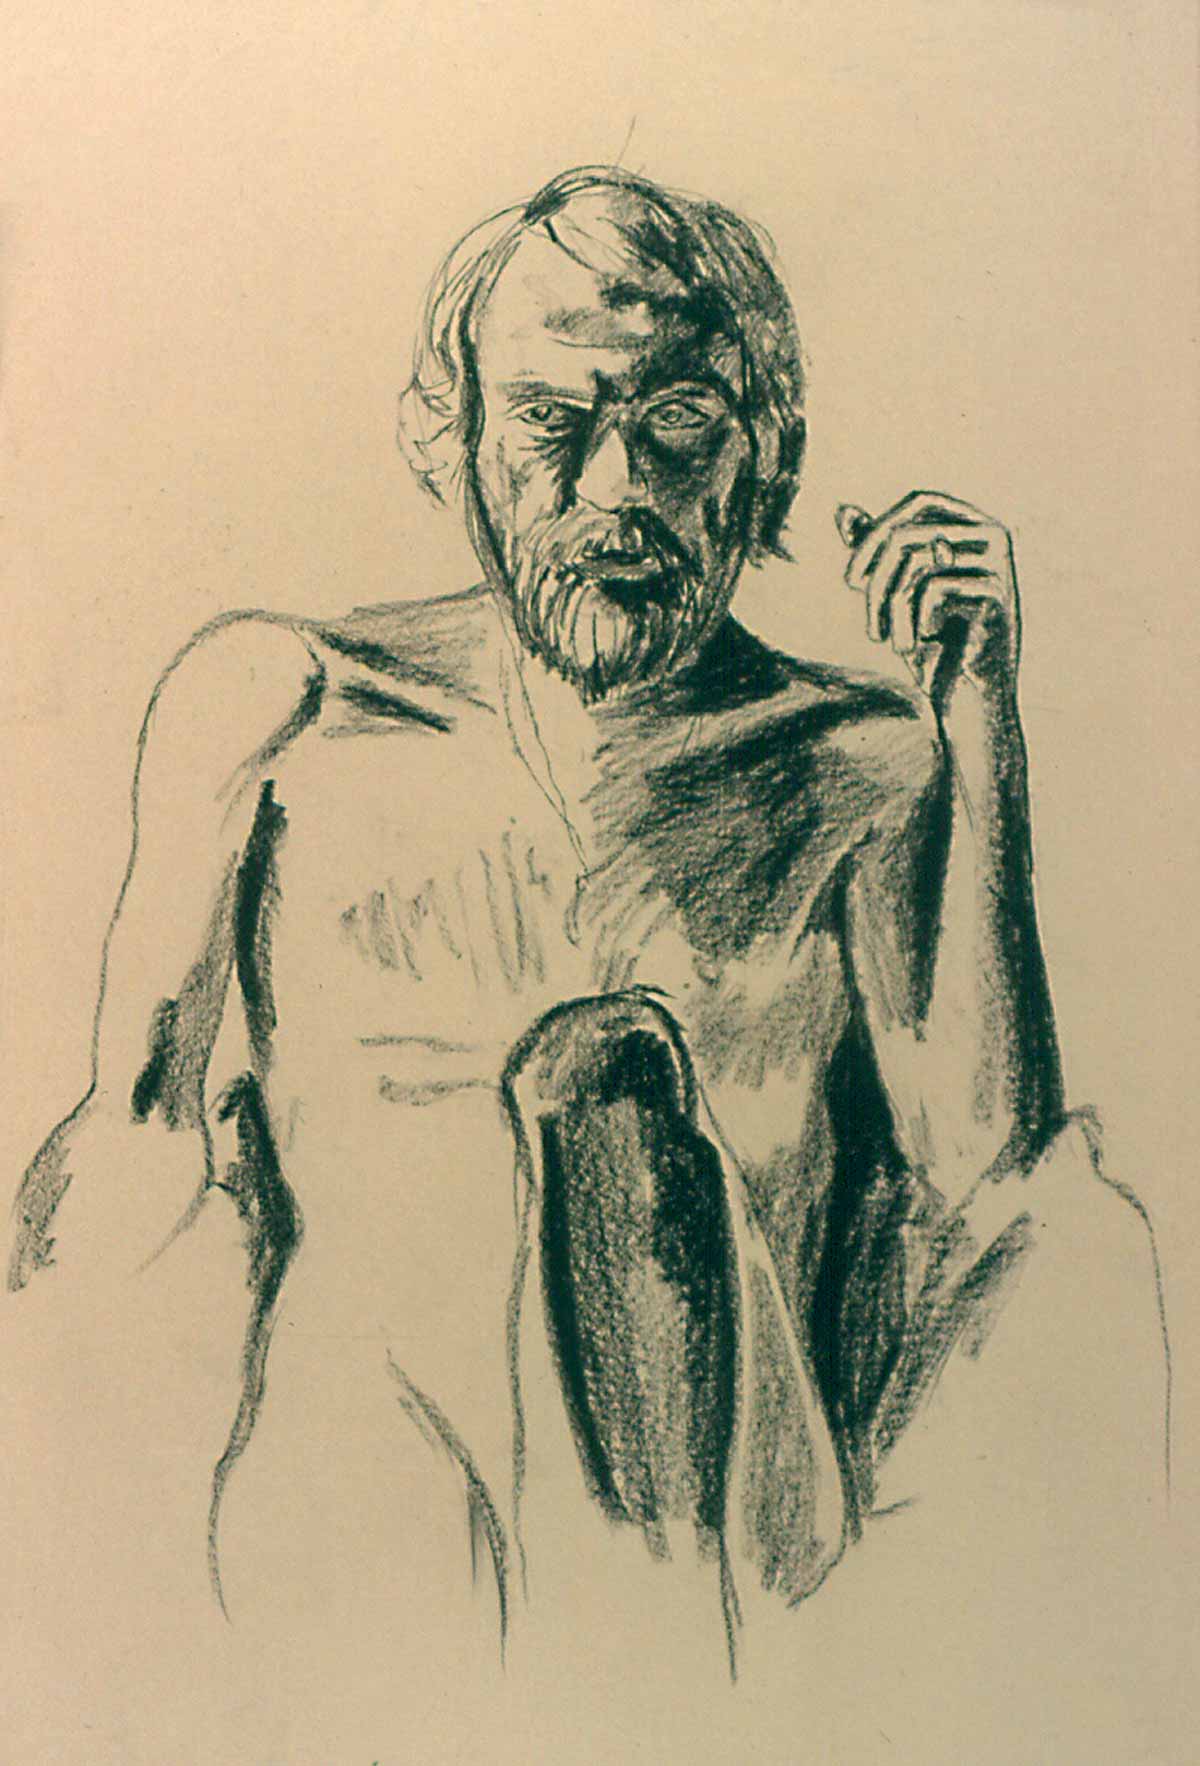 gesture drawing of male figure